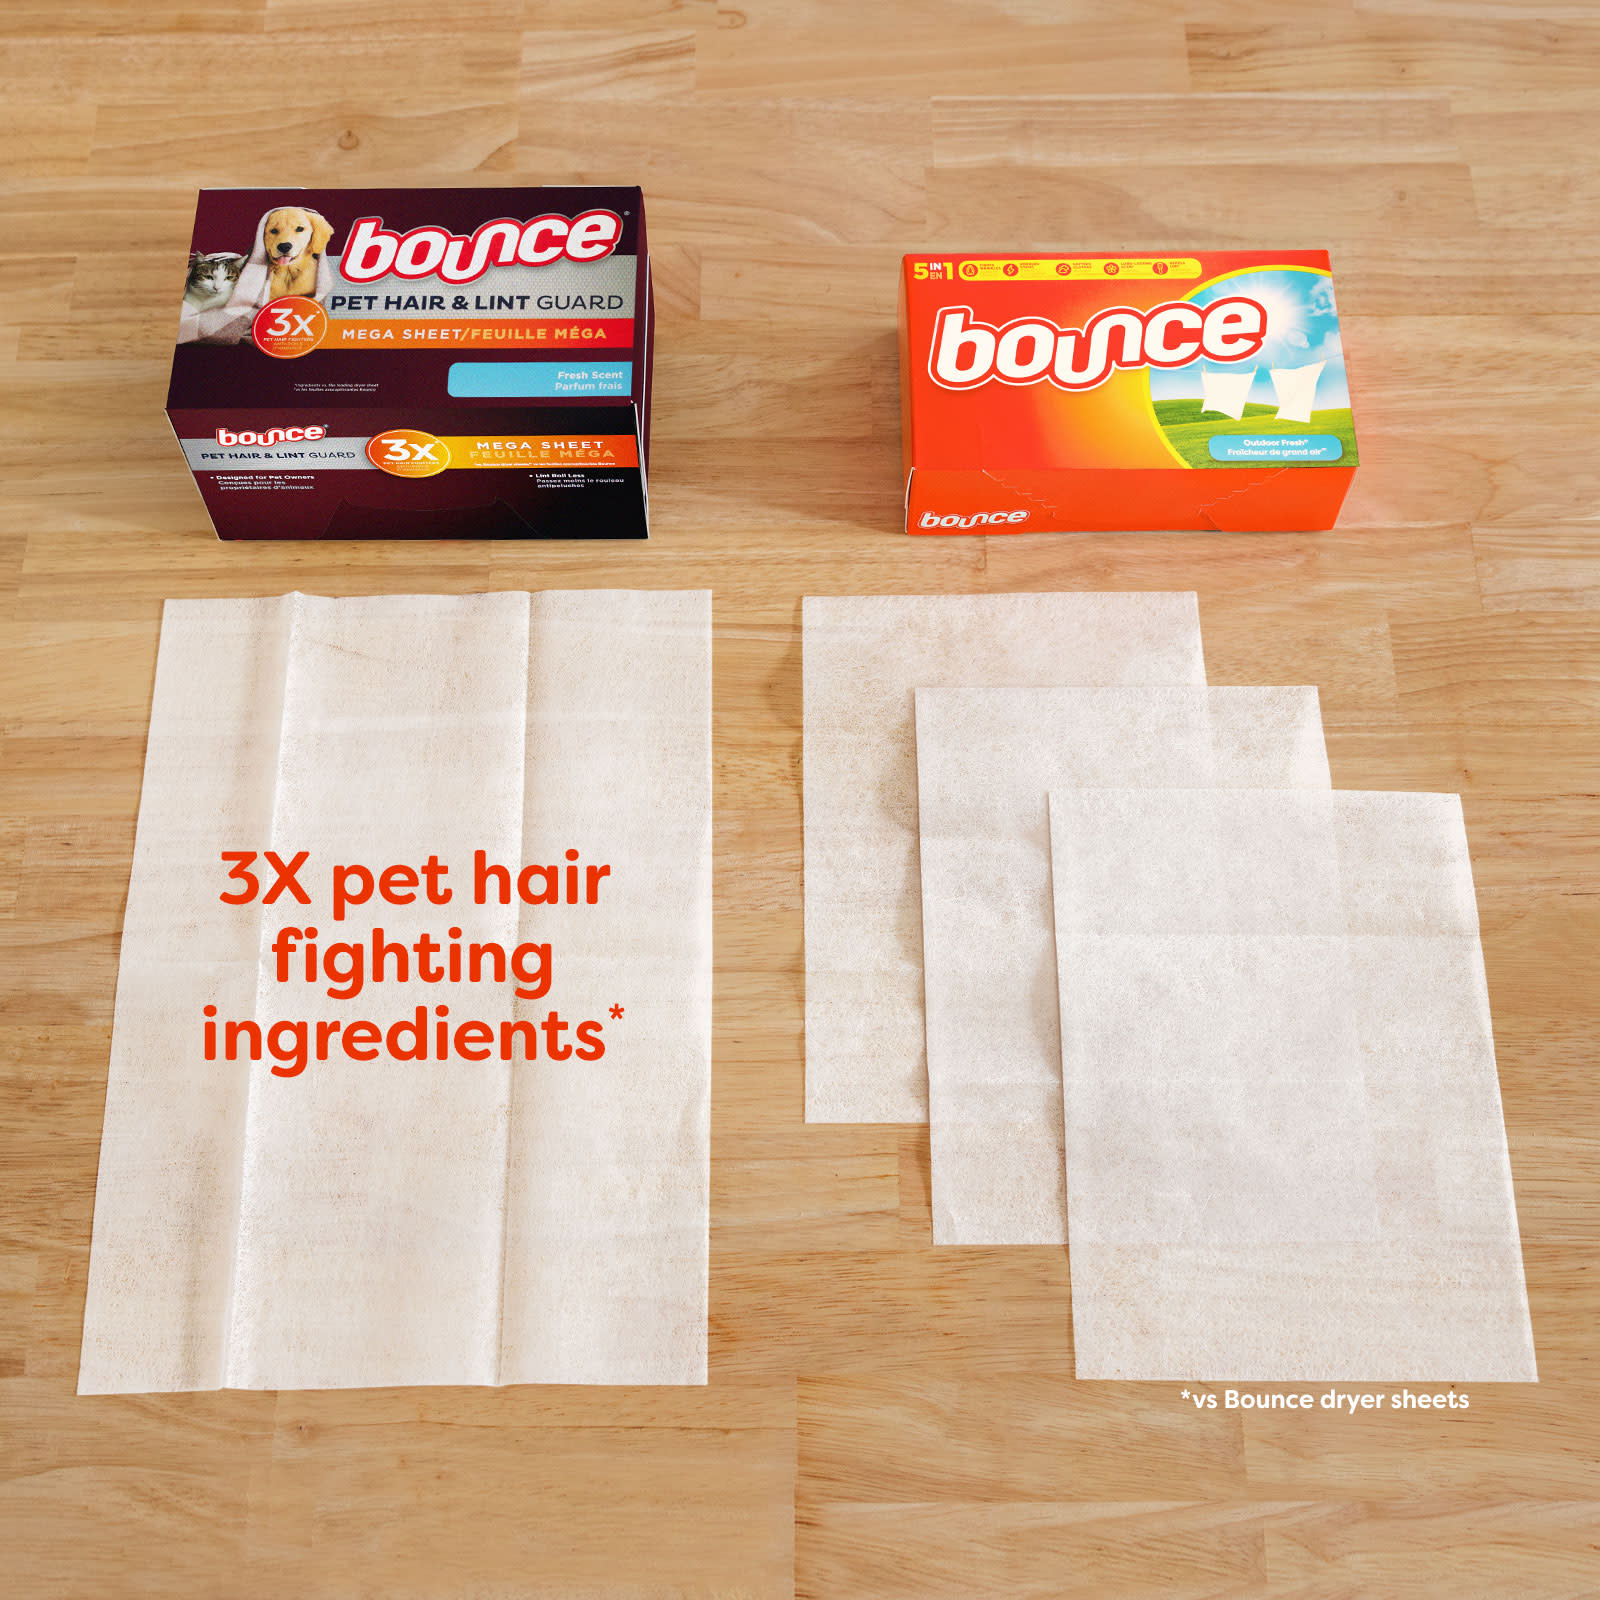 Bounce Pet Hair Dryer Sheets: 3X pet hair fighting ingredients